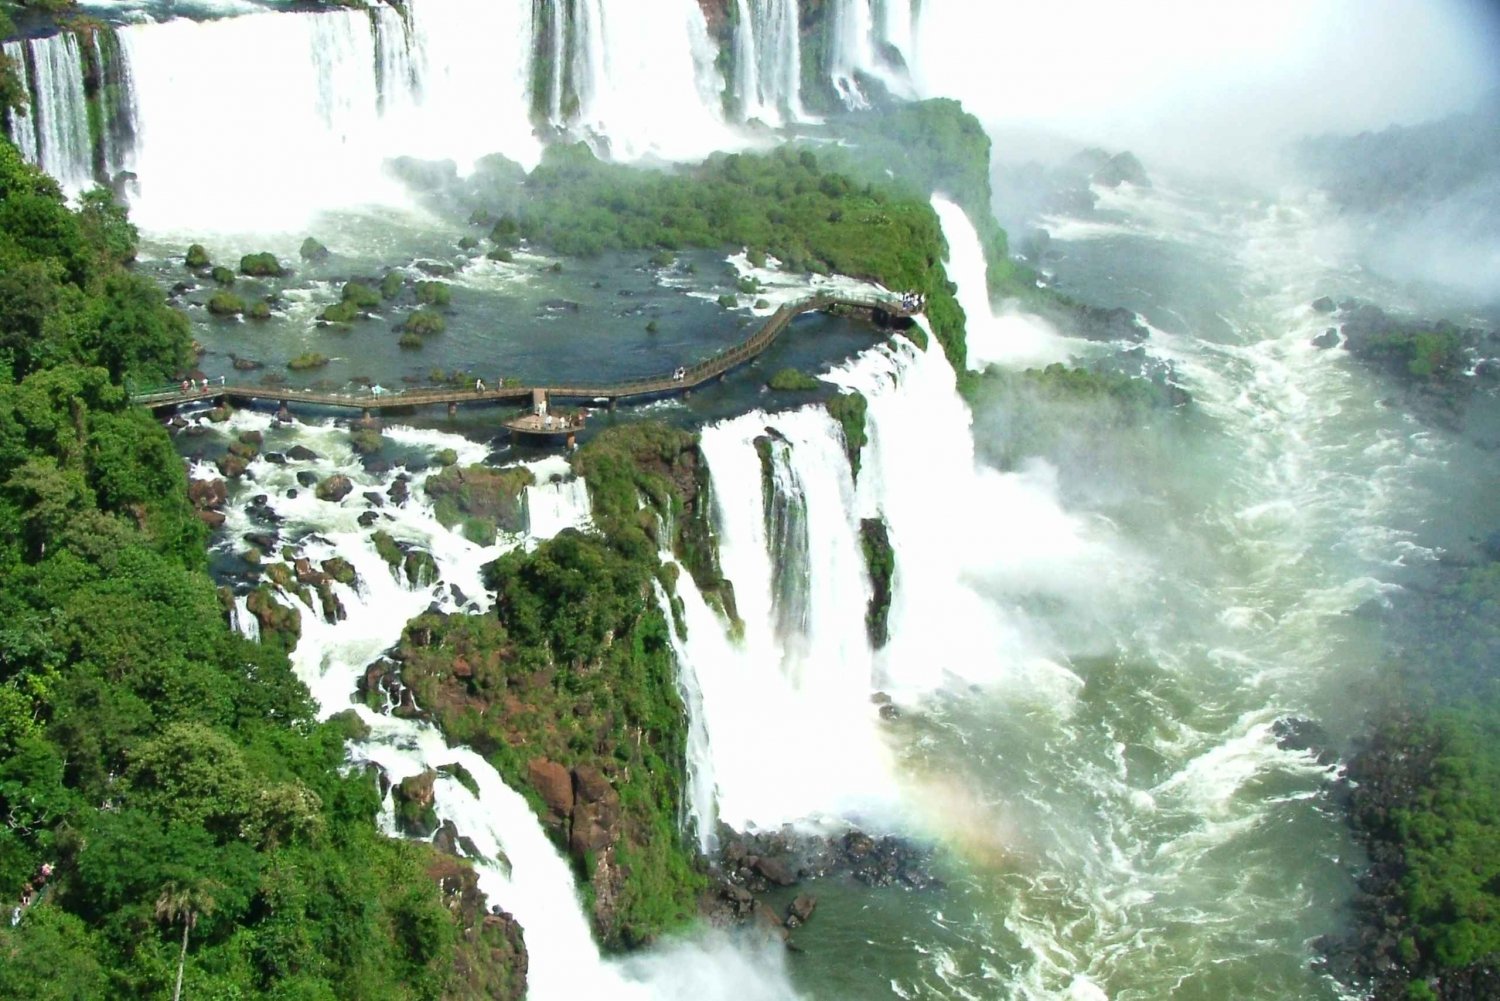 Private - A Woderfull day at Iguassu falls Argentinean side